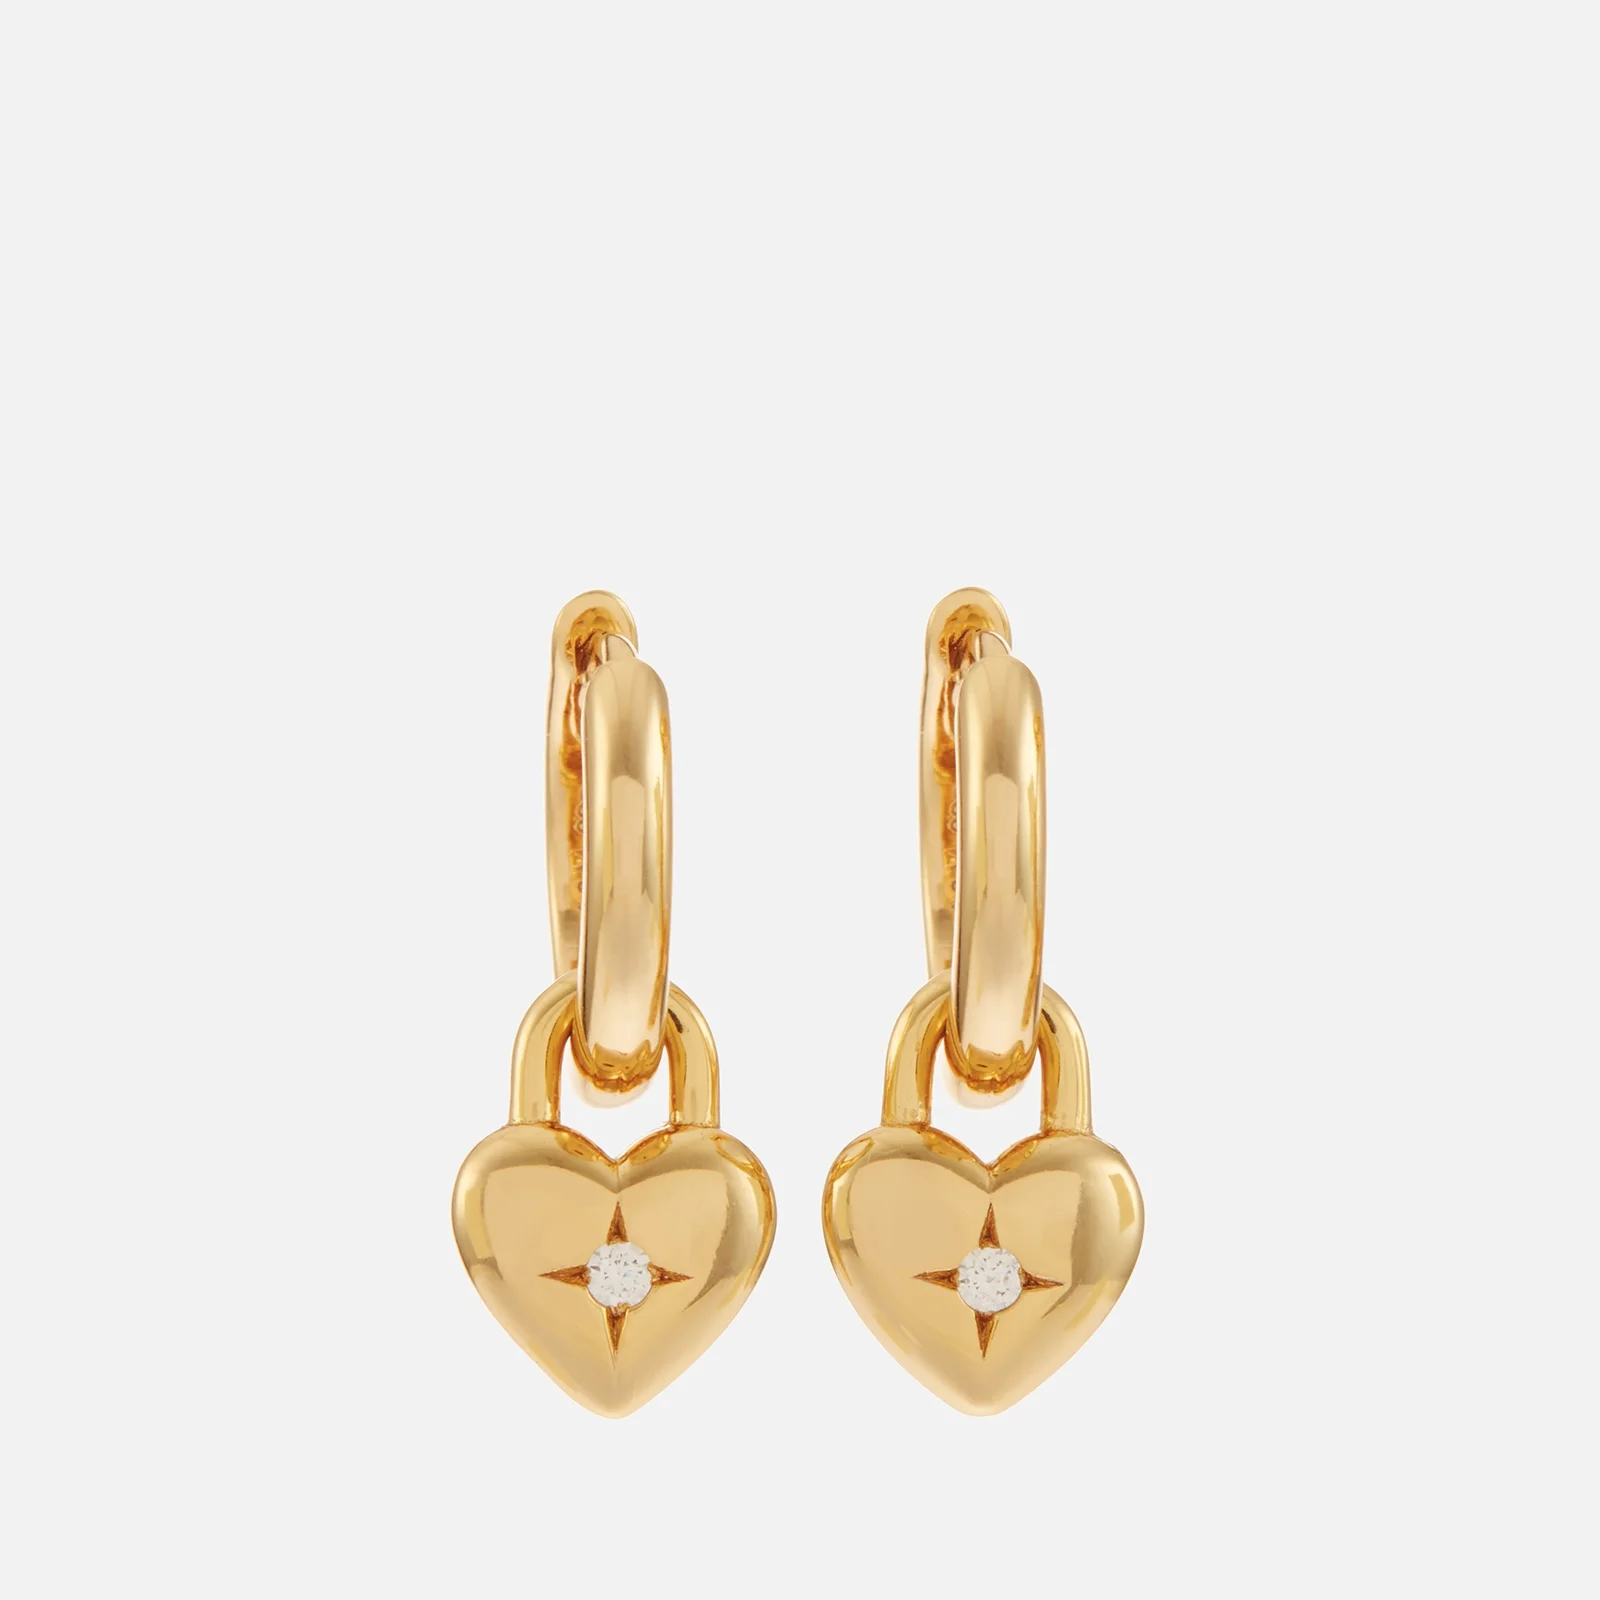 Astrid & Miyu Heart 18K Gold-Plated Sterling Silver Huggie Earrings Image 1